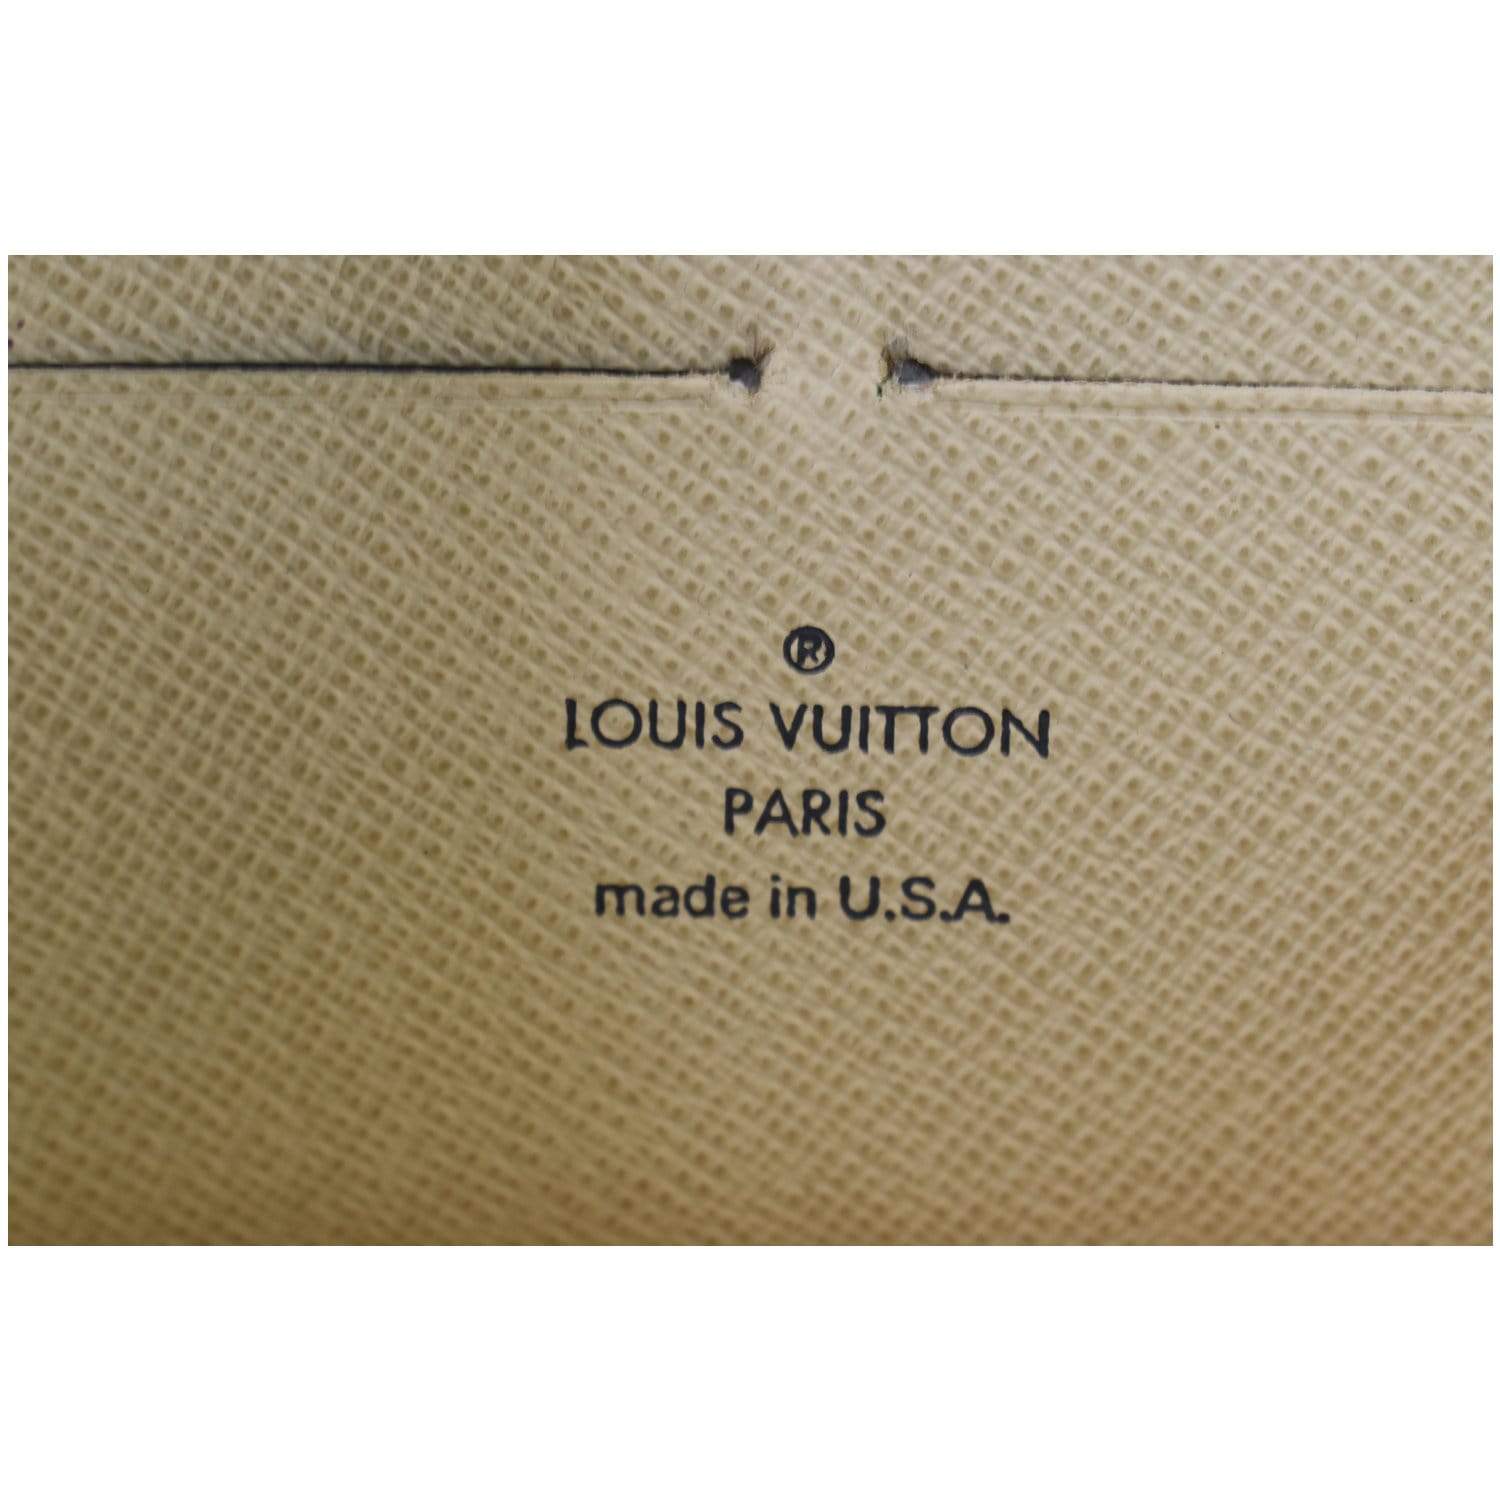 AliciaShop New ‼️ LOUIS VUITTON กระเป๋าสตางค์สายโซ่รุ่น DAUPHINE